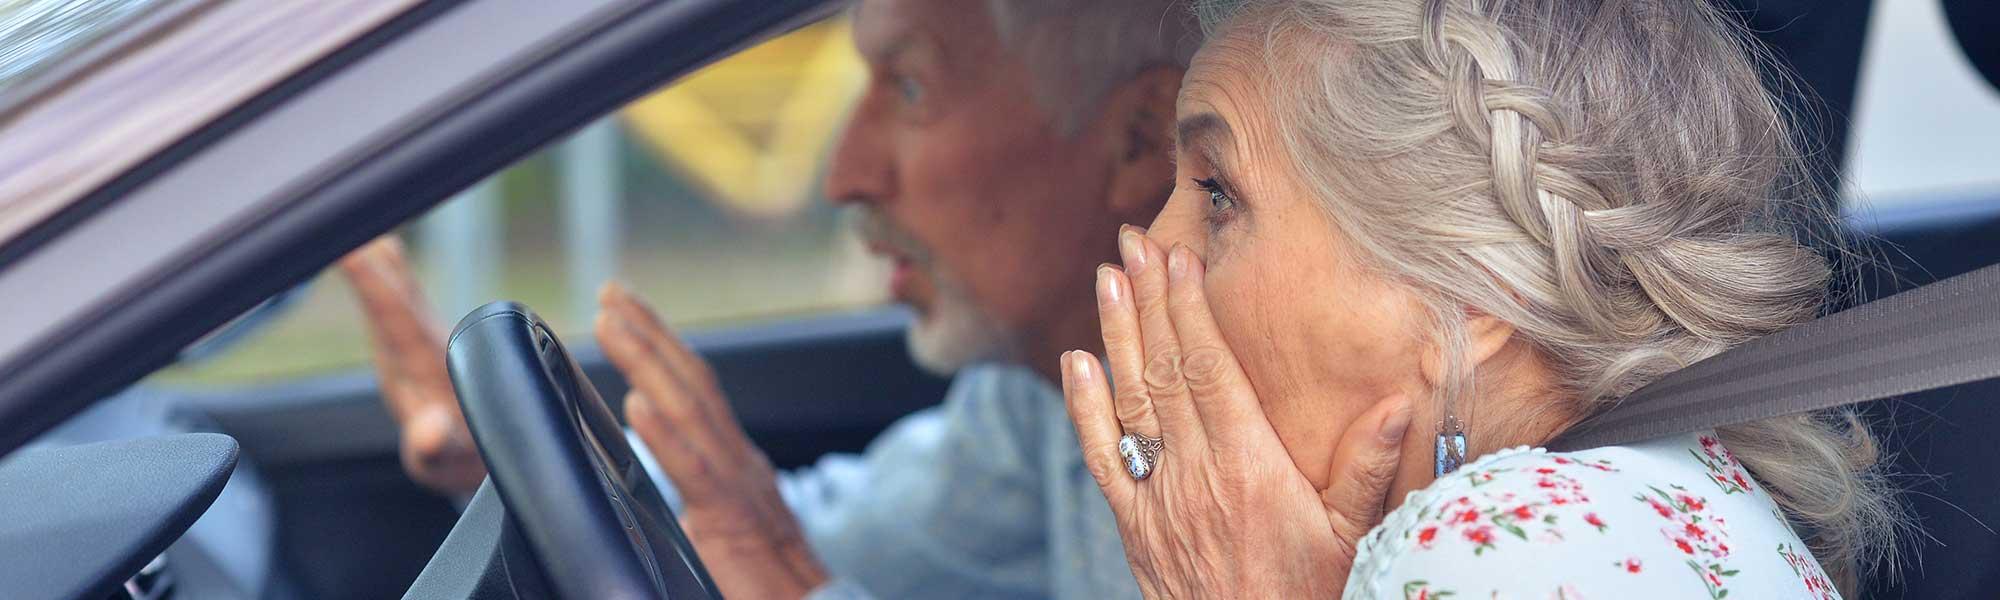 Seniors au volant : jusqu’à quand peut-on conduire ?